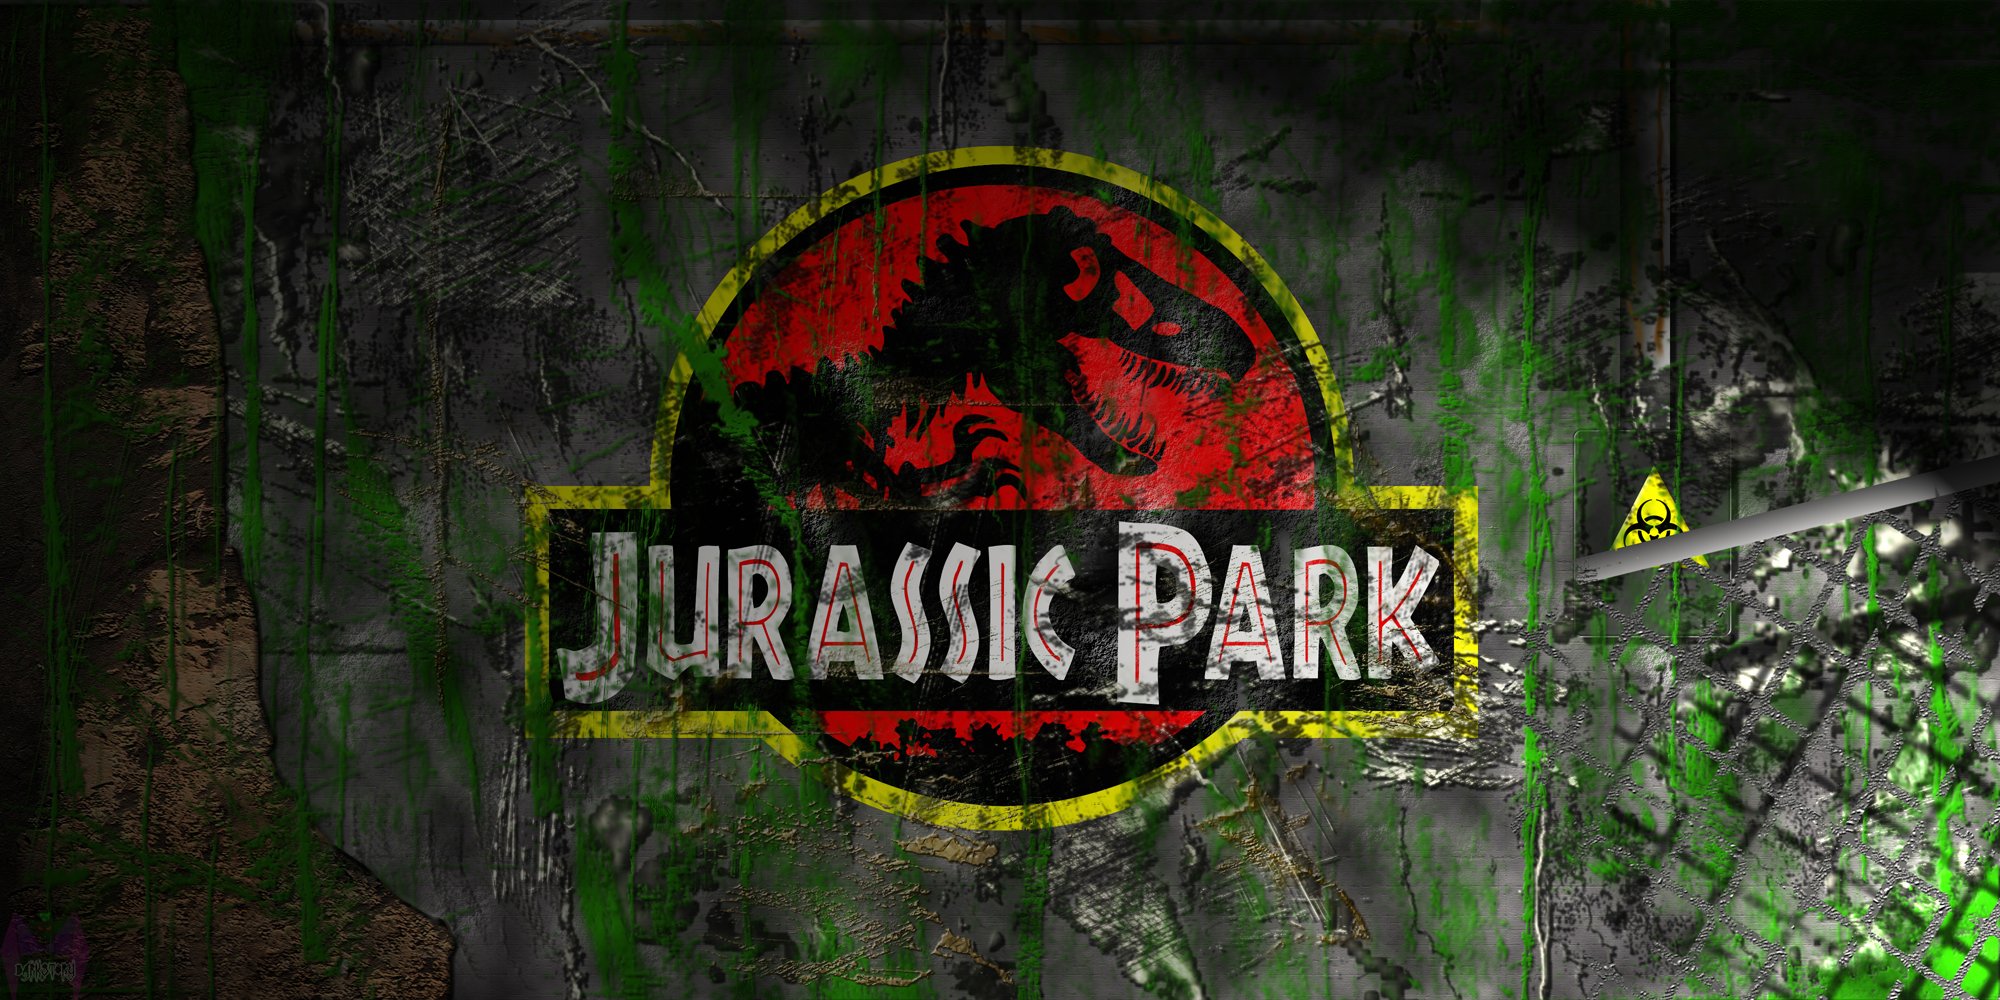 jurassic, Park, Adventure, Sci fi, Fantasy, Dinosaur, Movie, Film